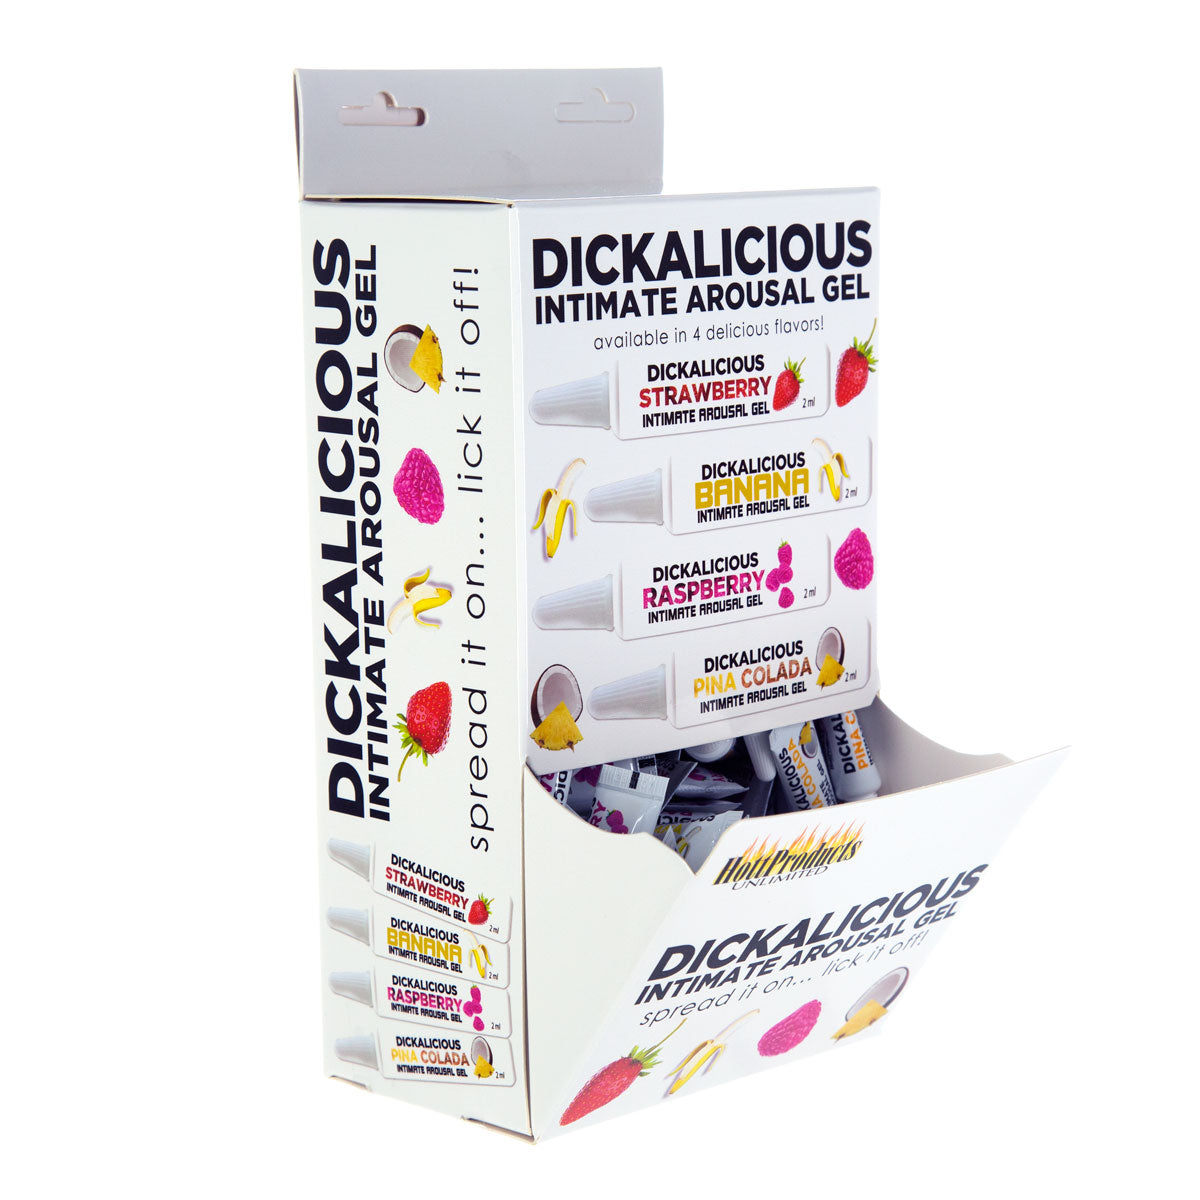 HottProducts Dickalicious Penis Arousal Gel Pillow Pack Display - Display of 144